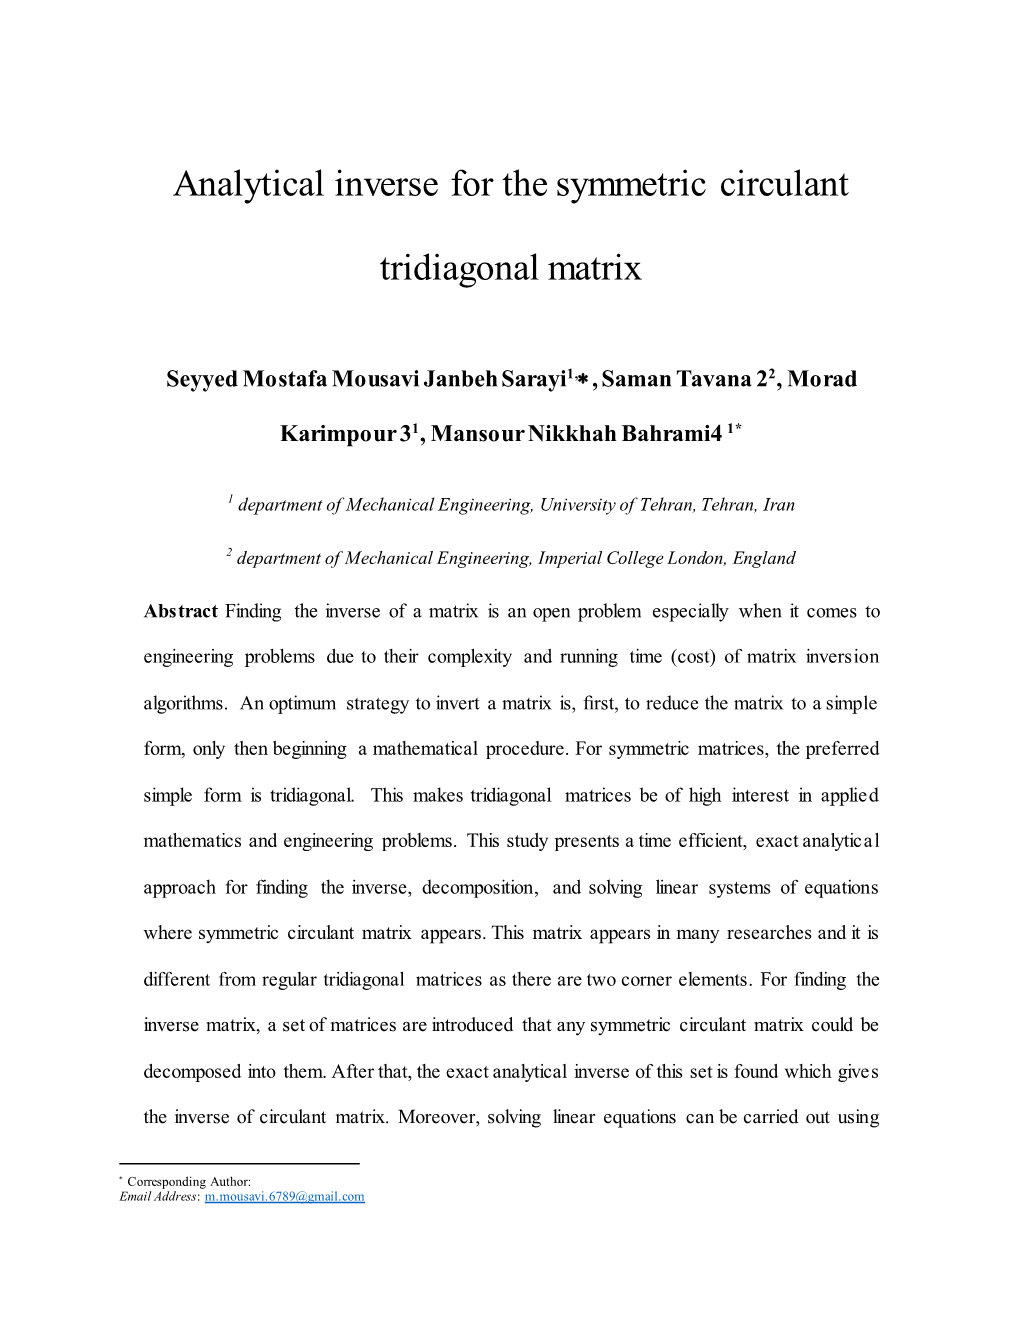 Analytical Inverse for the Symmetric Circulant Tridiagonal Matrix